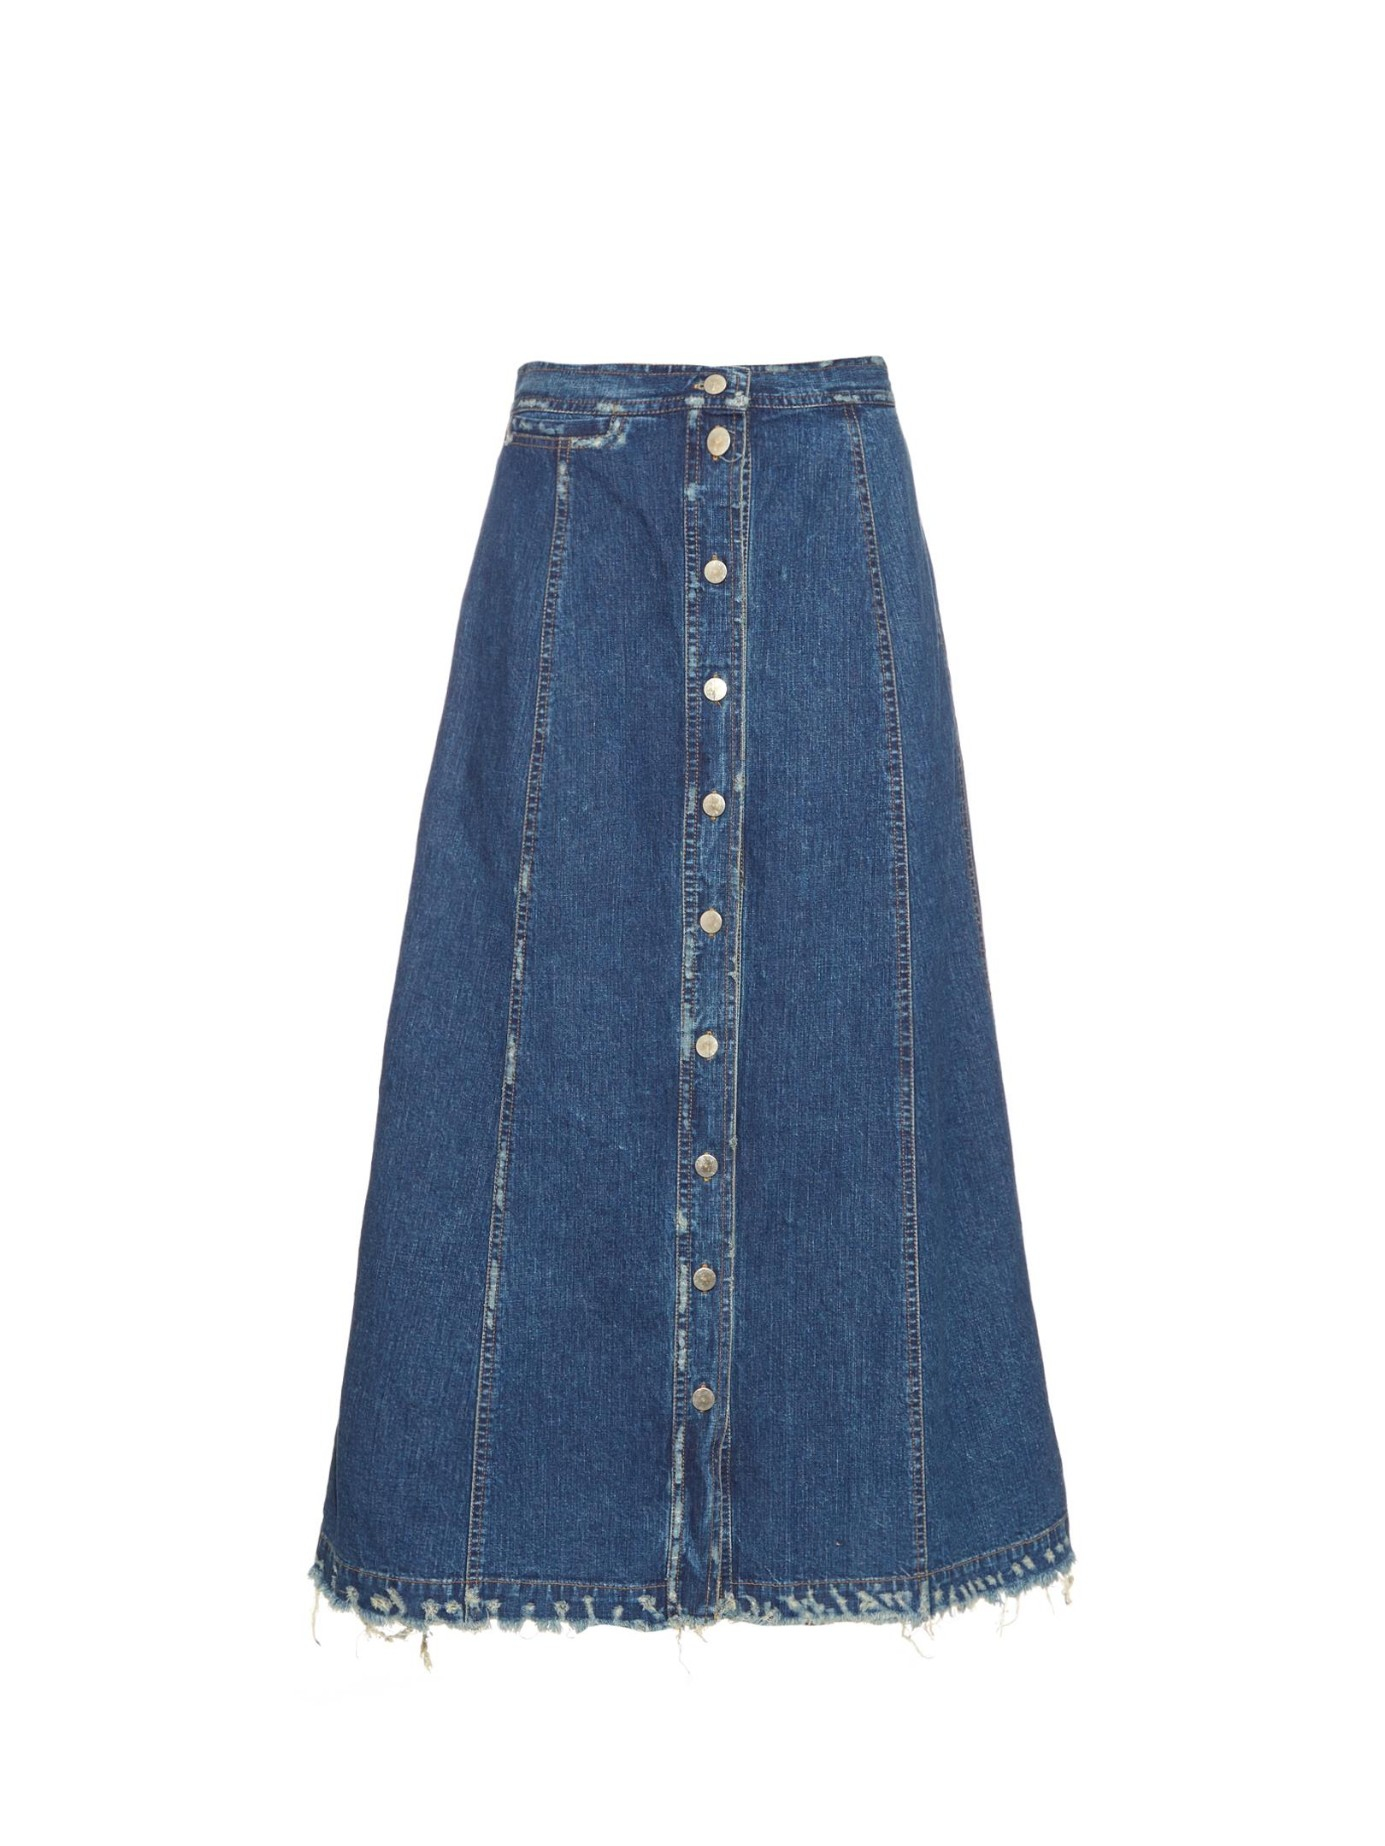 Rachel Comey 'Gore' Denim Skirt in Blue | Lyst